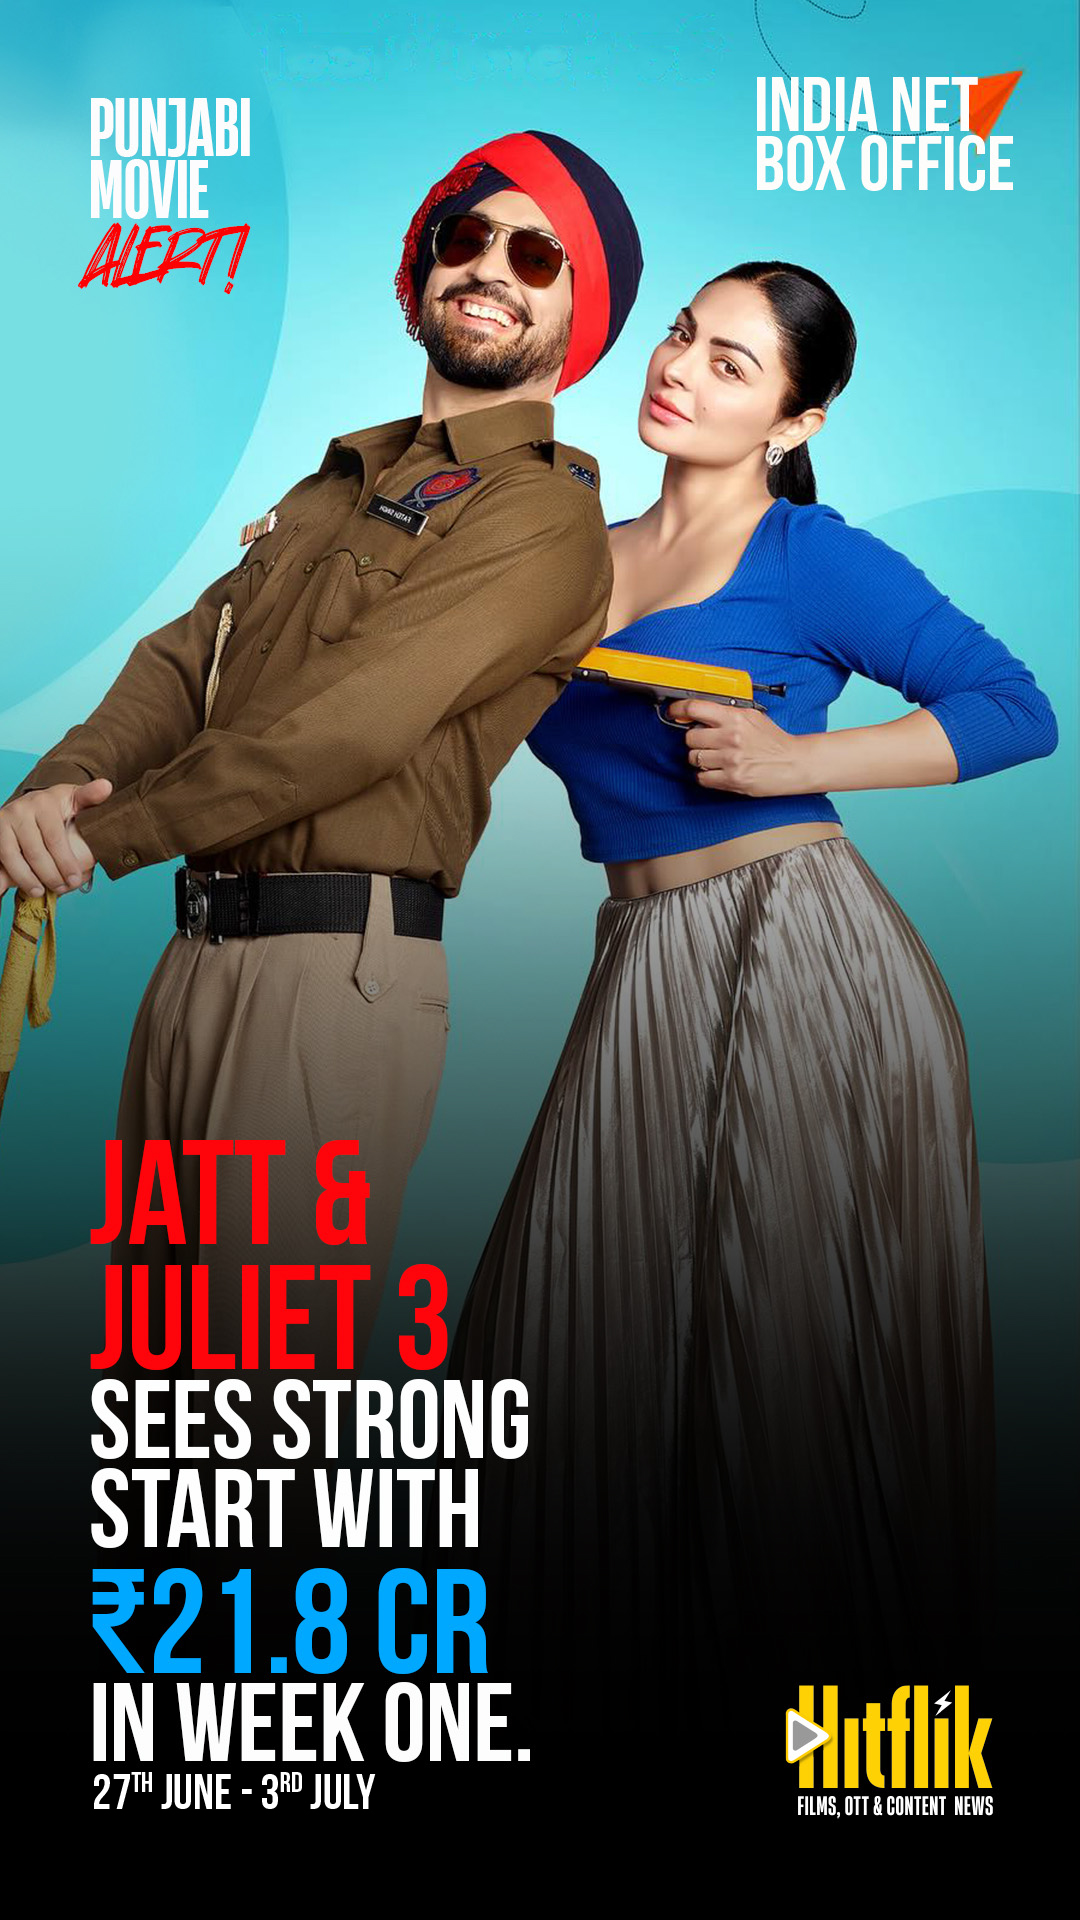 Jatt & Juliet 3, Punjabi film, box office, box office collection